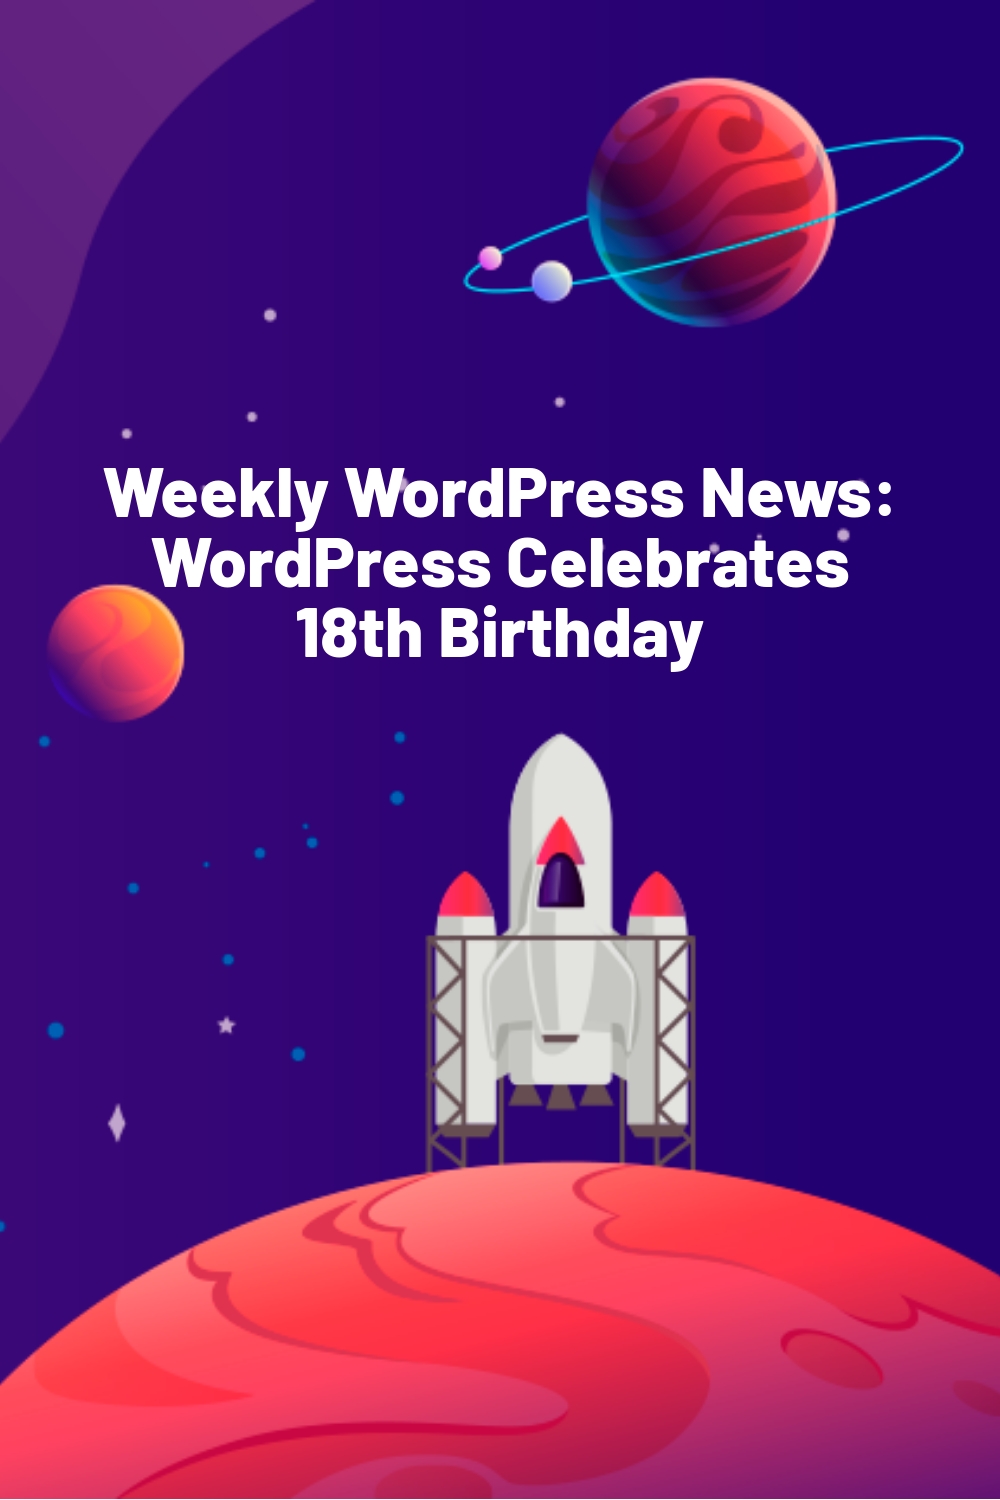 Weekly WordPress News: WordPress Celebrates 18th Birthday